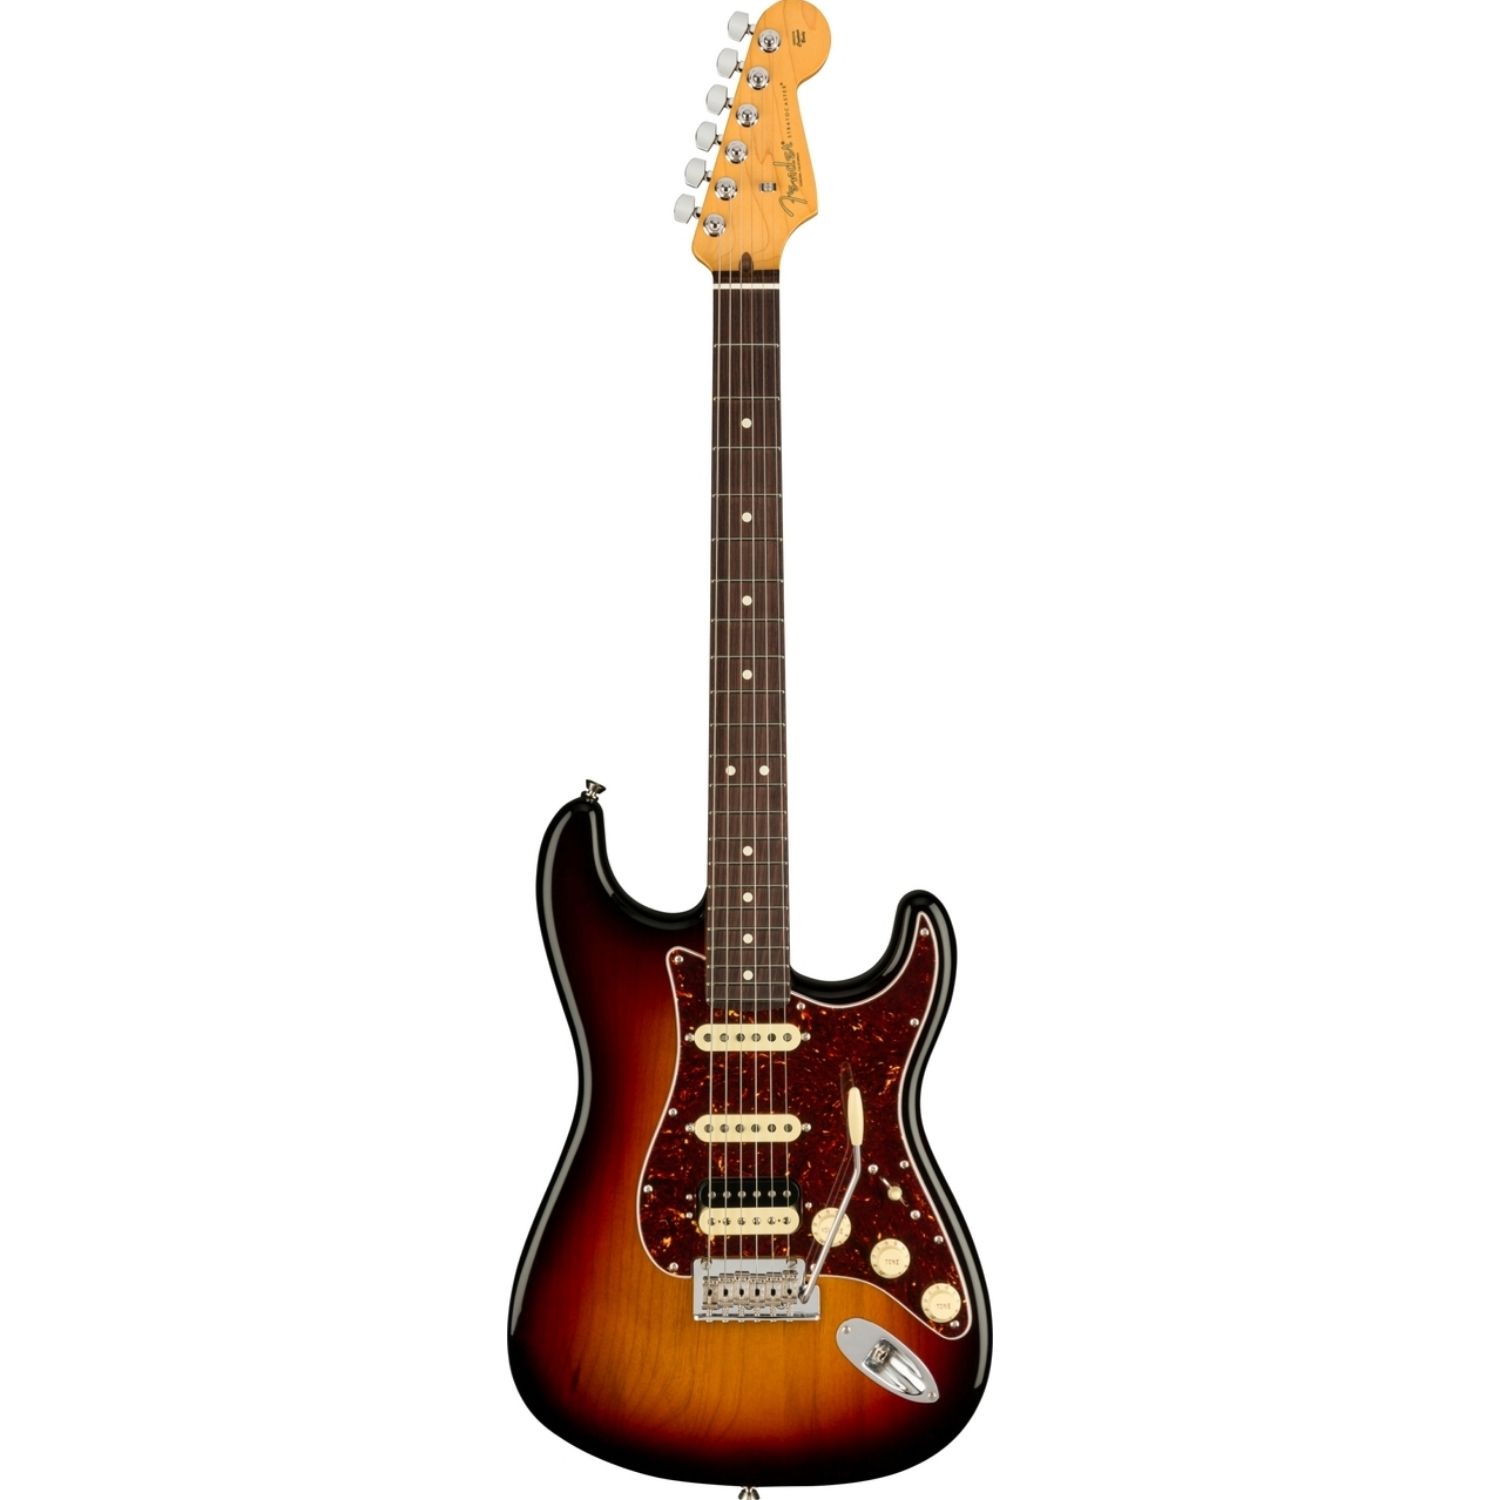 Fender AM Pro II Strat online price in India